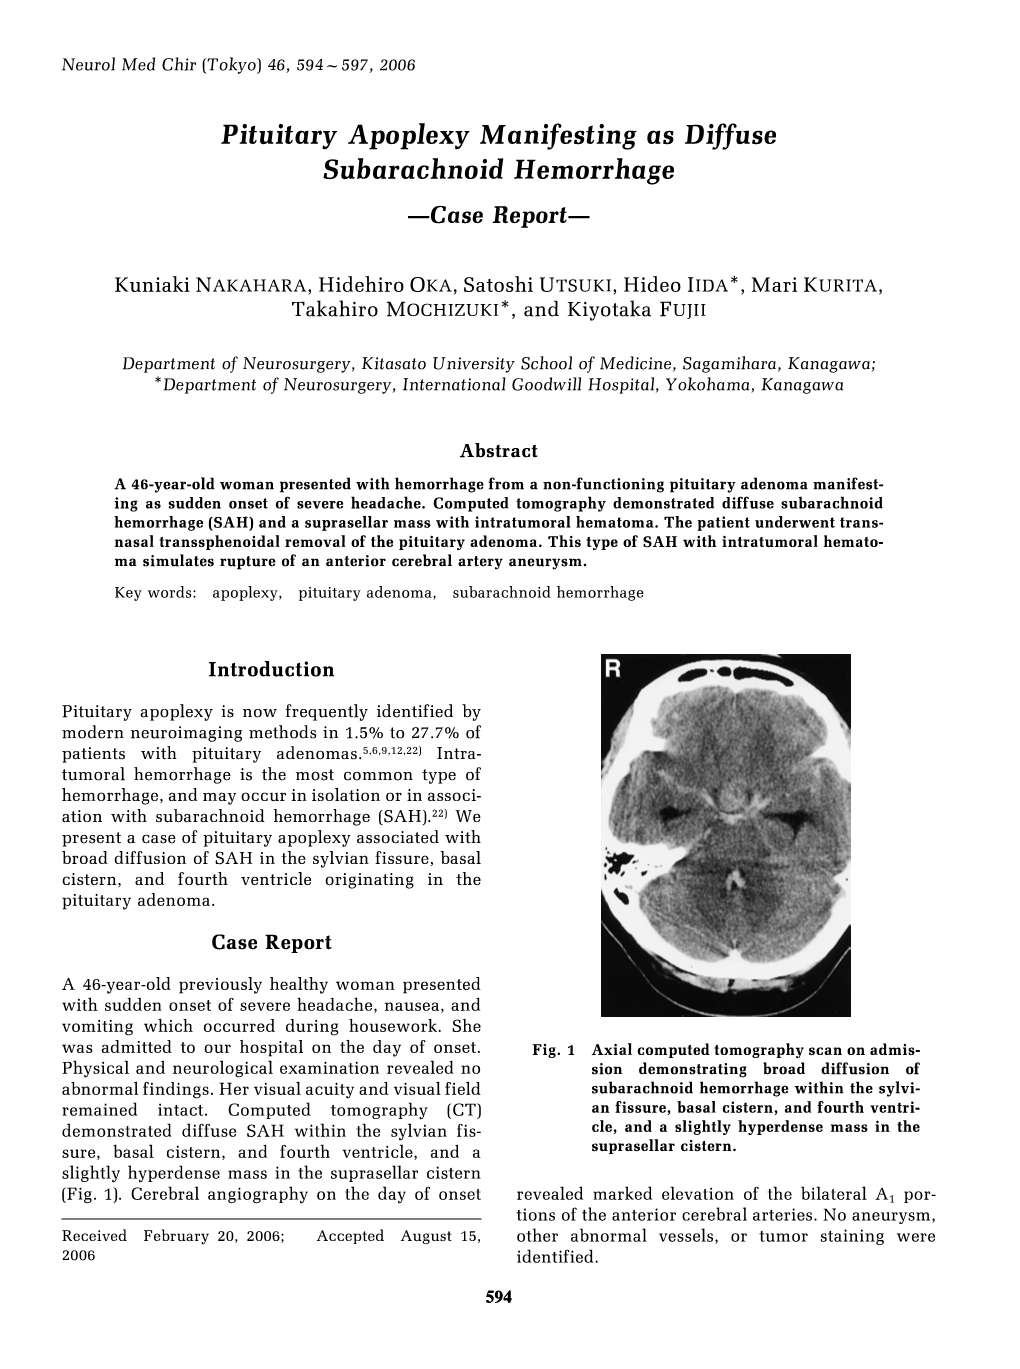 Pituitary Apoplexy Manifesting As Diffuse Subarachnoid Hemorrhage —Case Report—